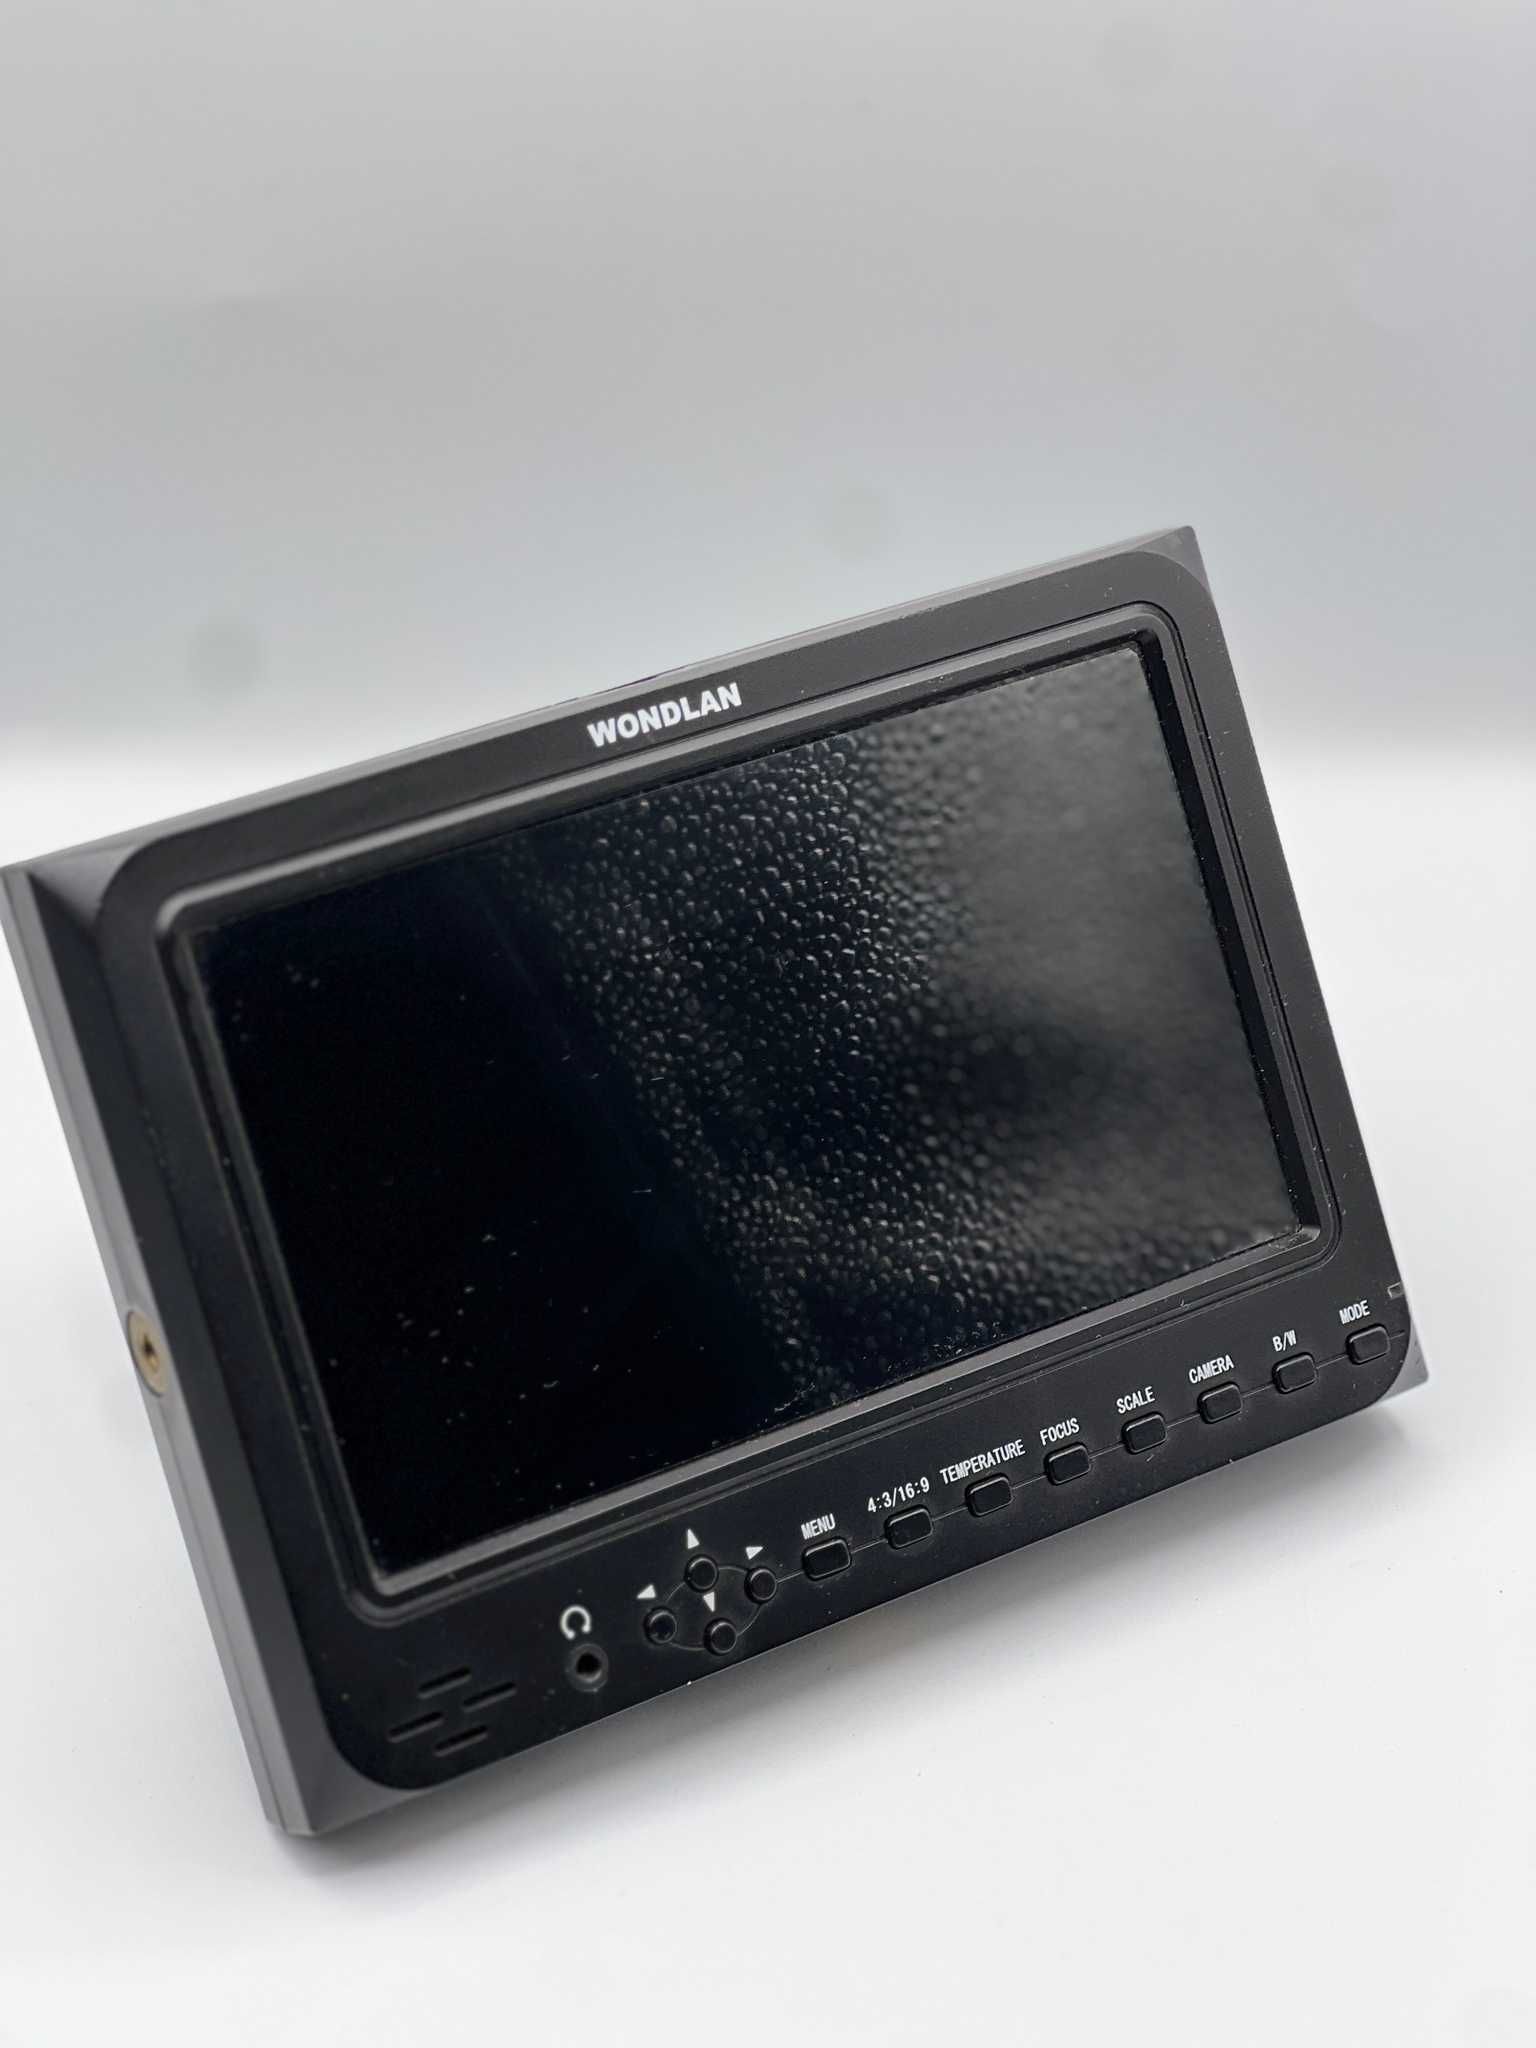 Wondlan WM-701B - monitor LCD 7 1024 x 600